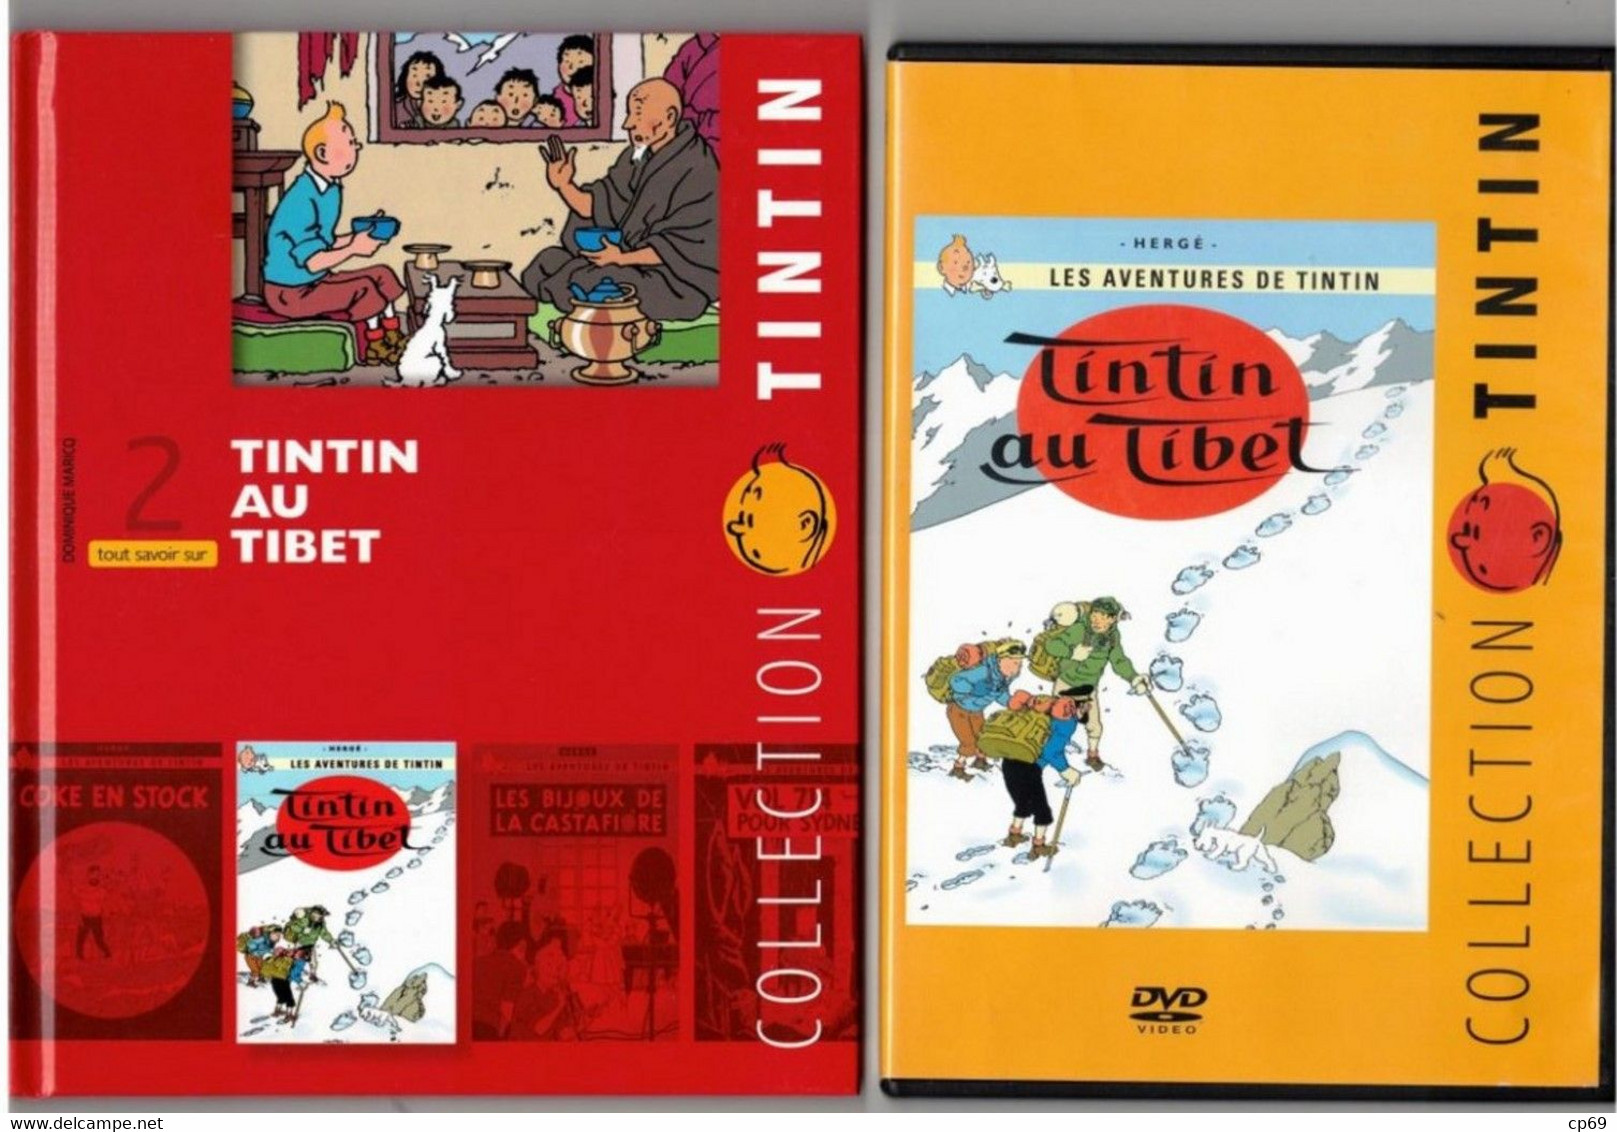 Tintin Hergé / Moulinsart 2010 Milou Chien Dog Cane Tintin Au Tibet Capitaine Haddock N°2 DVD + Livret Explicatif B.Etat - Cartoni Animati